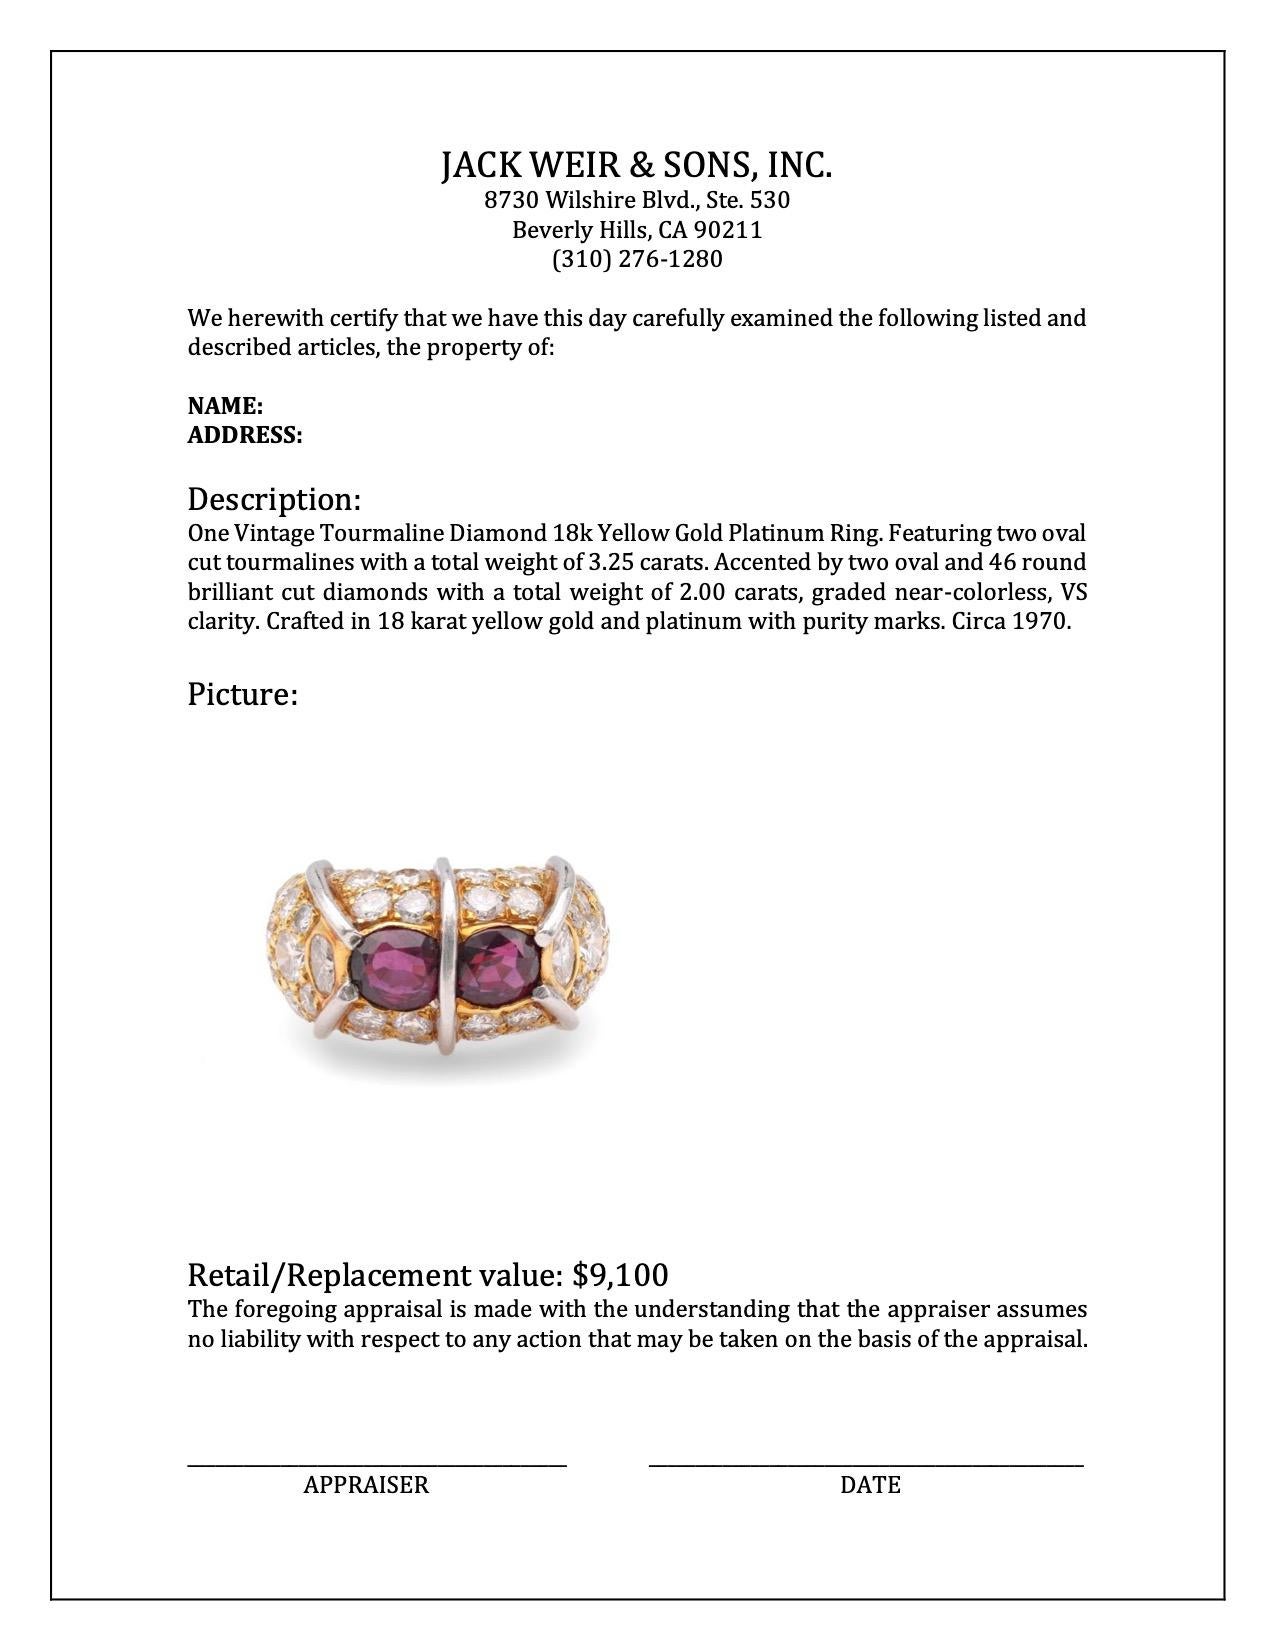 Women's or Men's Vintage Tourmaline Diamond 18k Yellow Gold Platinum Ring For Sale